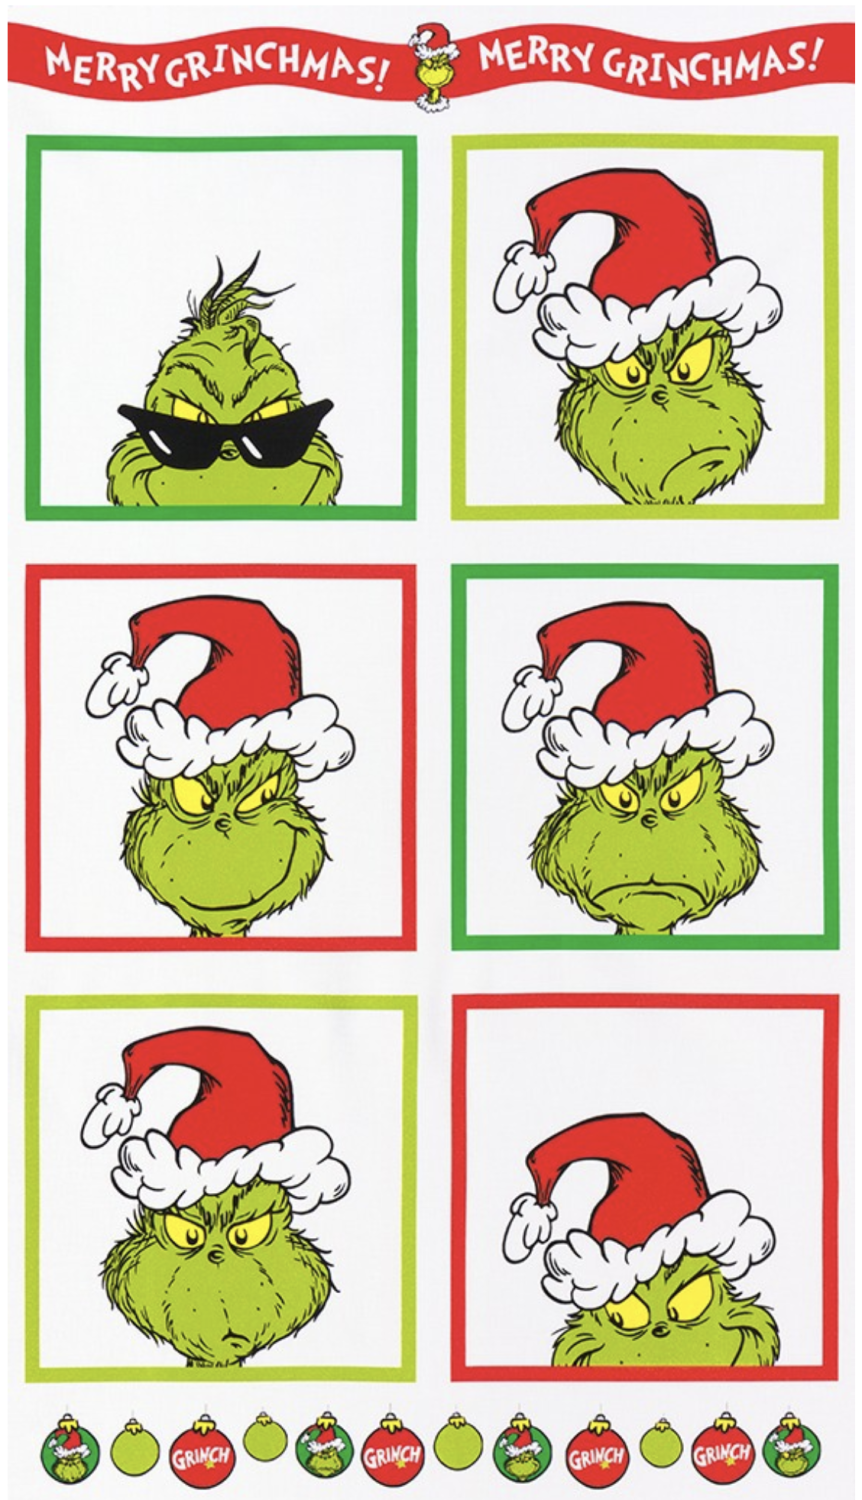 How the Grinch Stole Christmas HOLIDAY PANEL for Robert Kauffman Fabrics